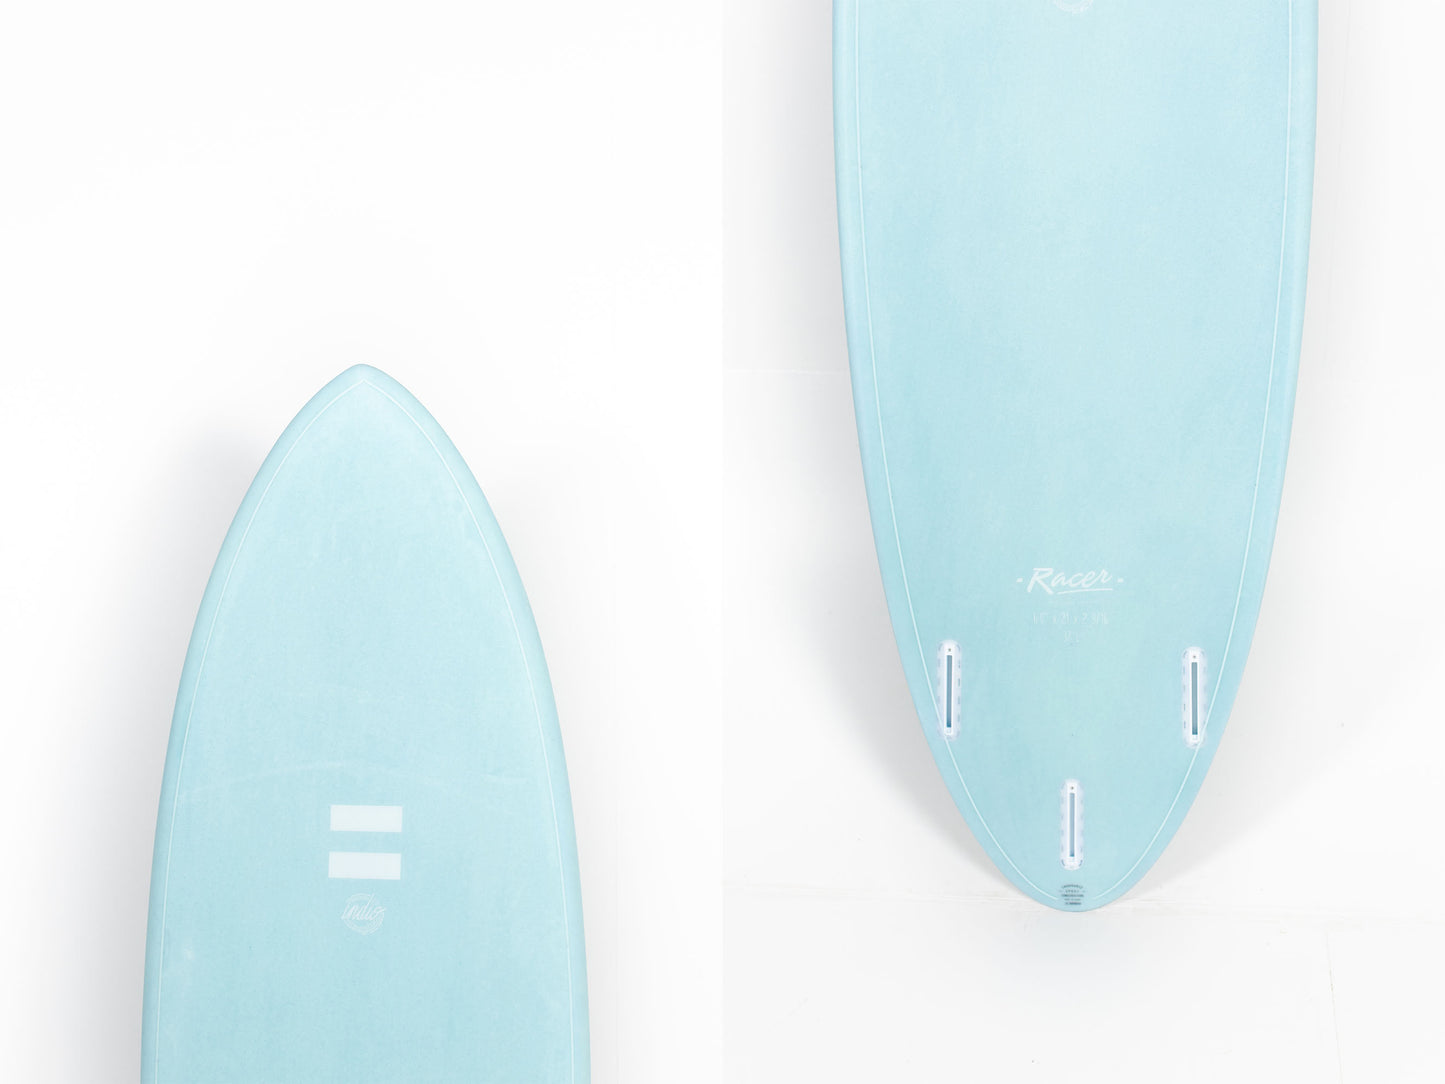 
                  
                    Pukas Surf Shop - Indio Endurance - RACER Aqua Blue - 6´0 x 21 x 2 9/16 - 37L
                  
                